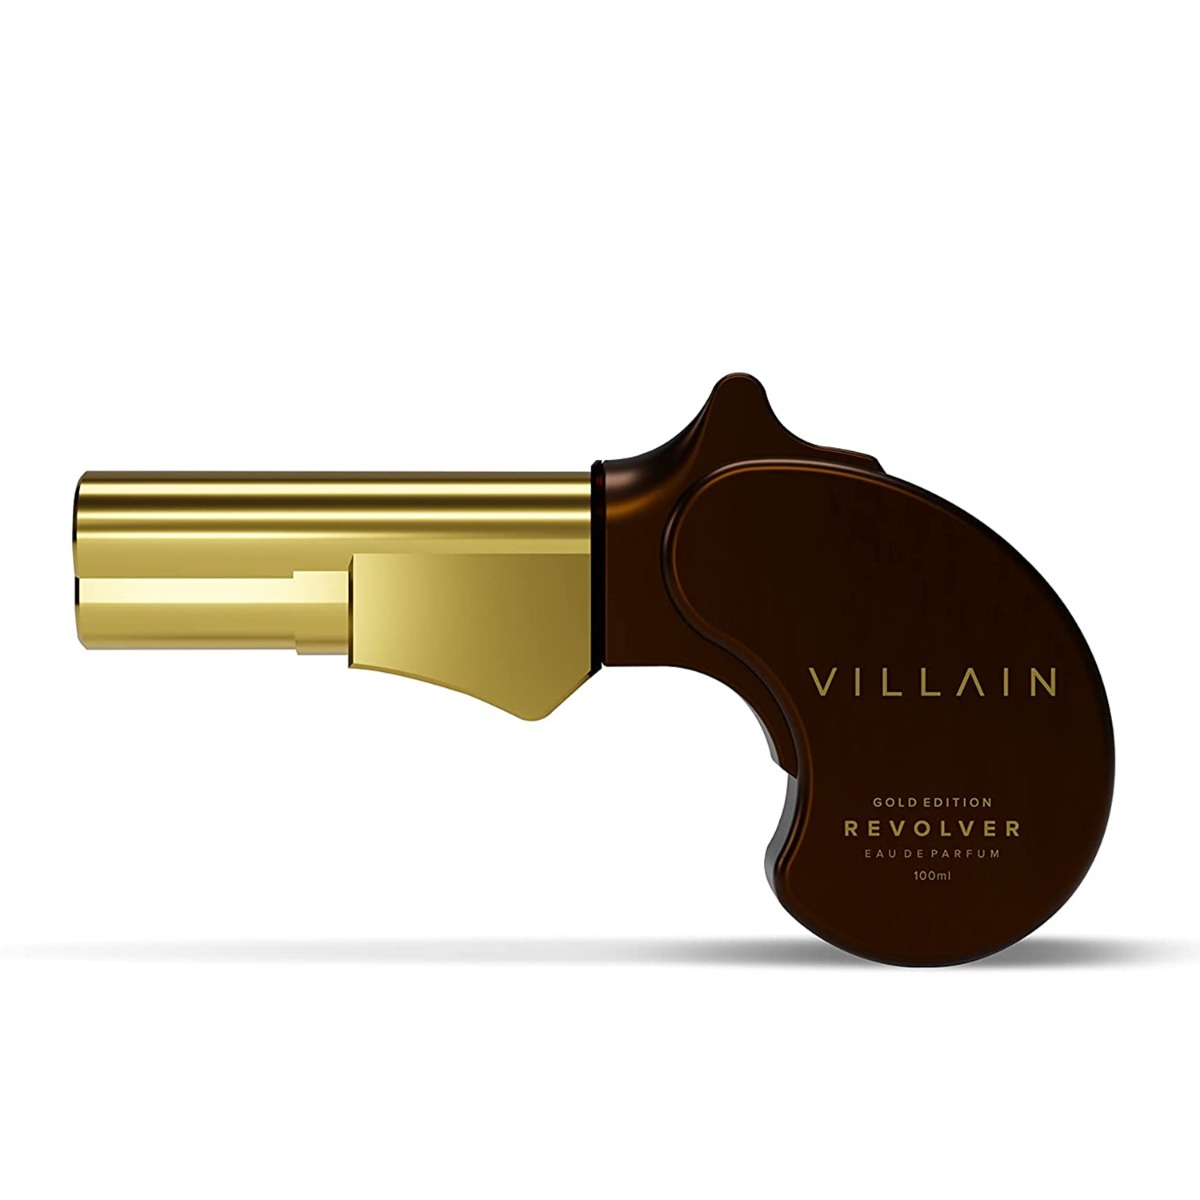 Villain Revolver Gold Edition, 100ml